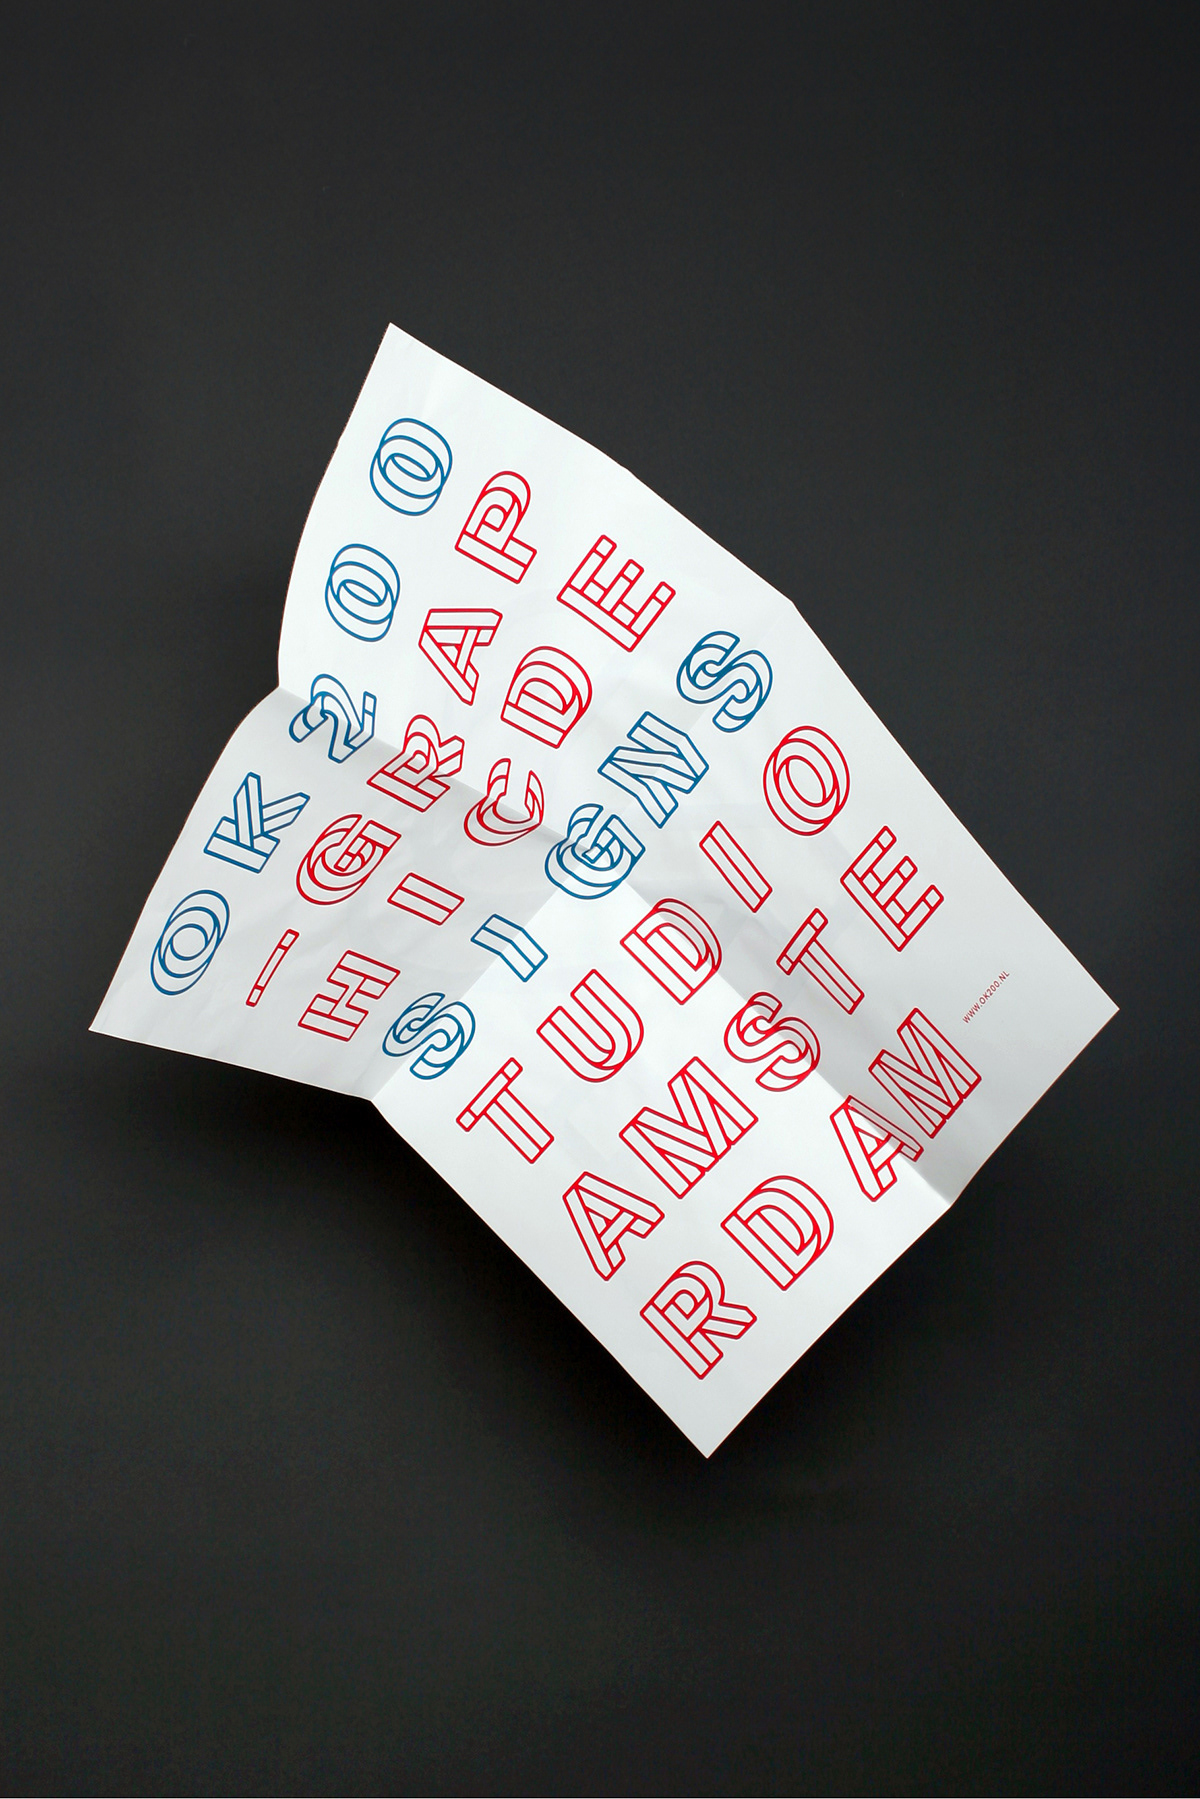 type design 3D lettering silkscreen Printing poster a2 folded 2 colour red blue White replica lineto Riso